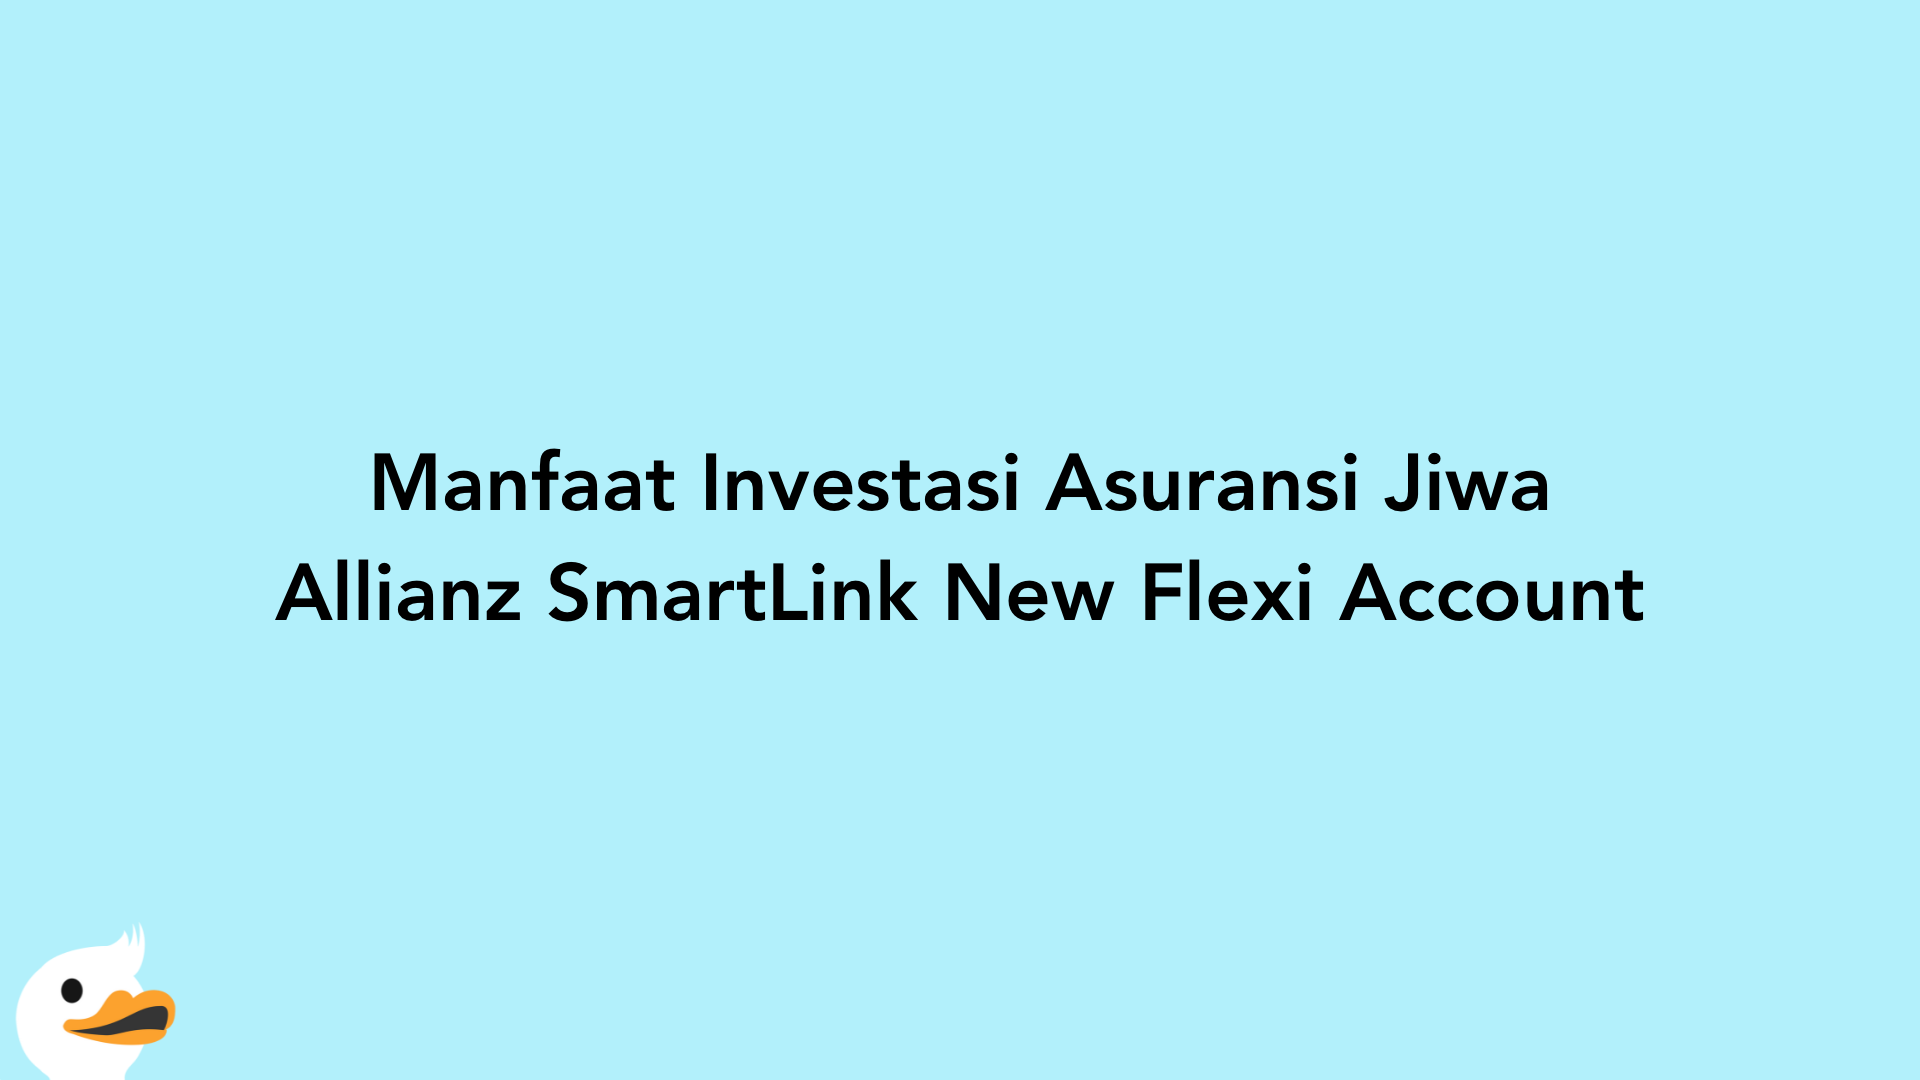 Manfaat Investasi Asuransi Jiwa Allianz SmartLink New Flexi Account